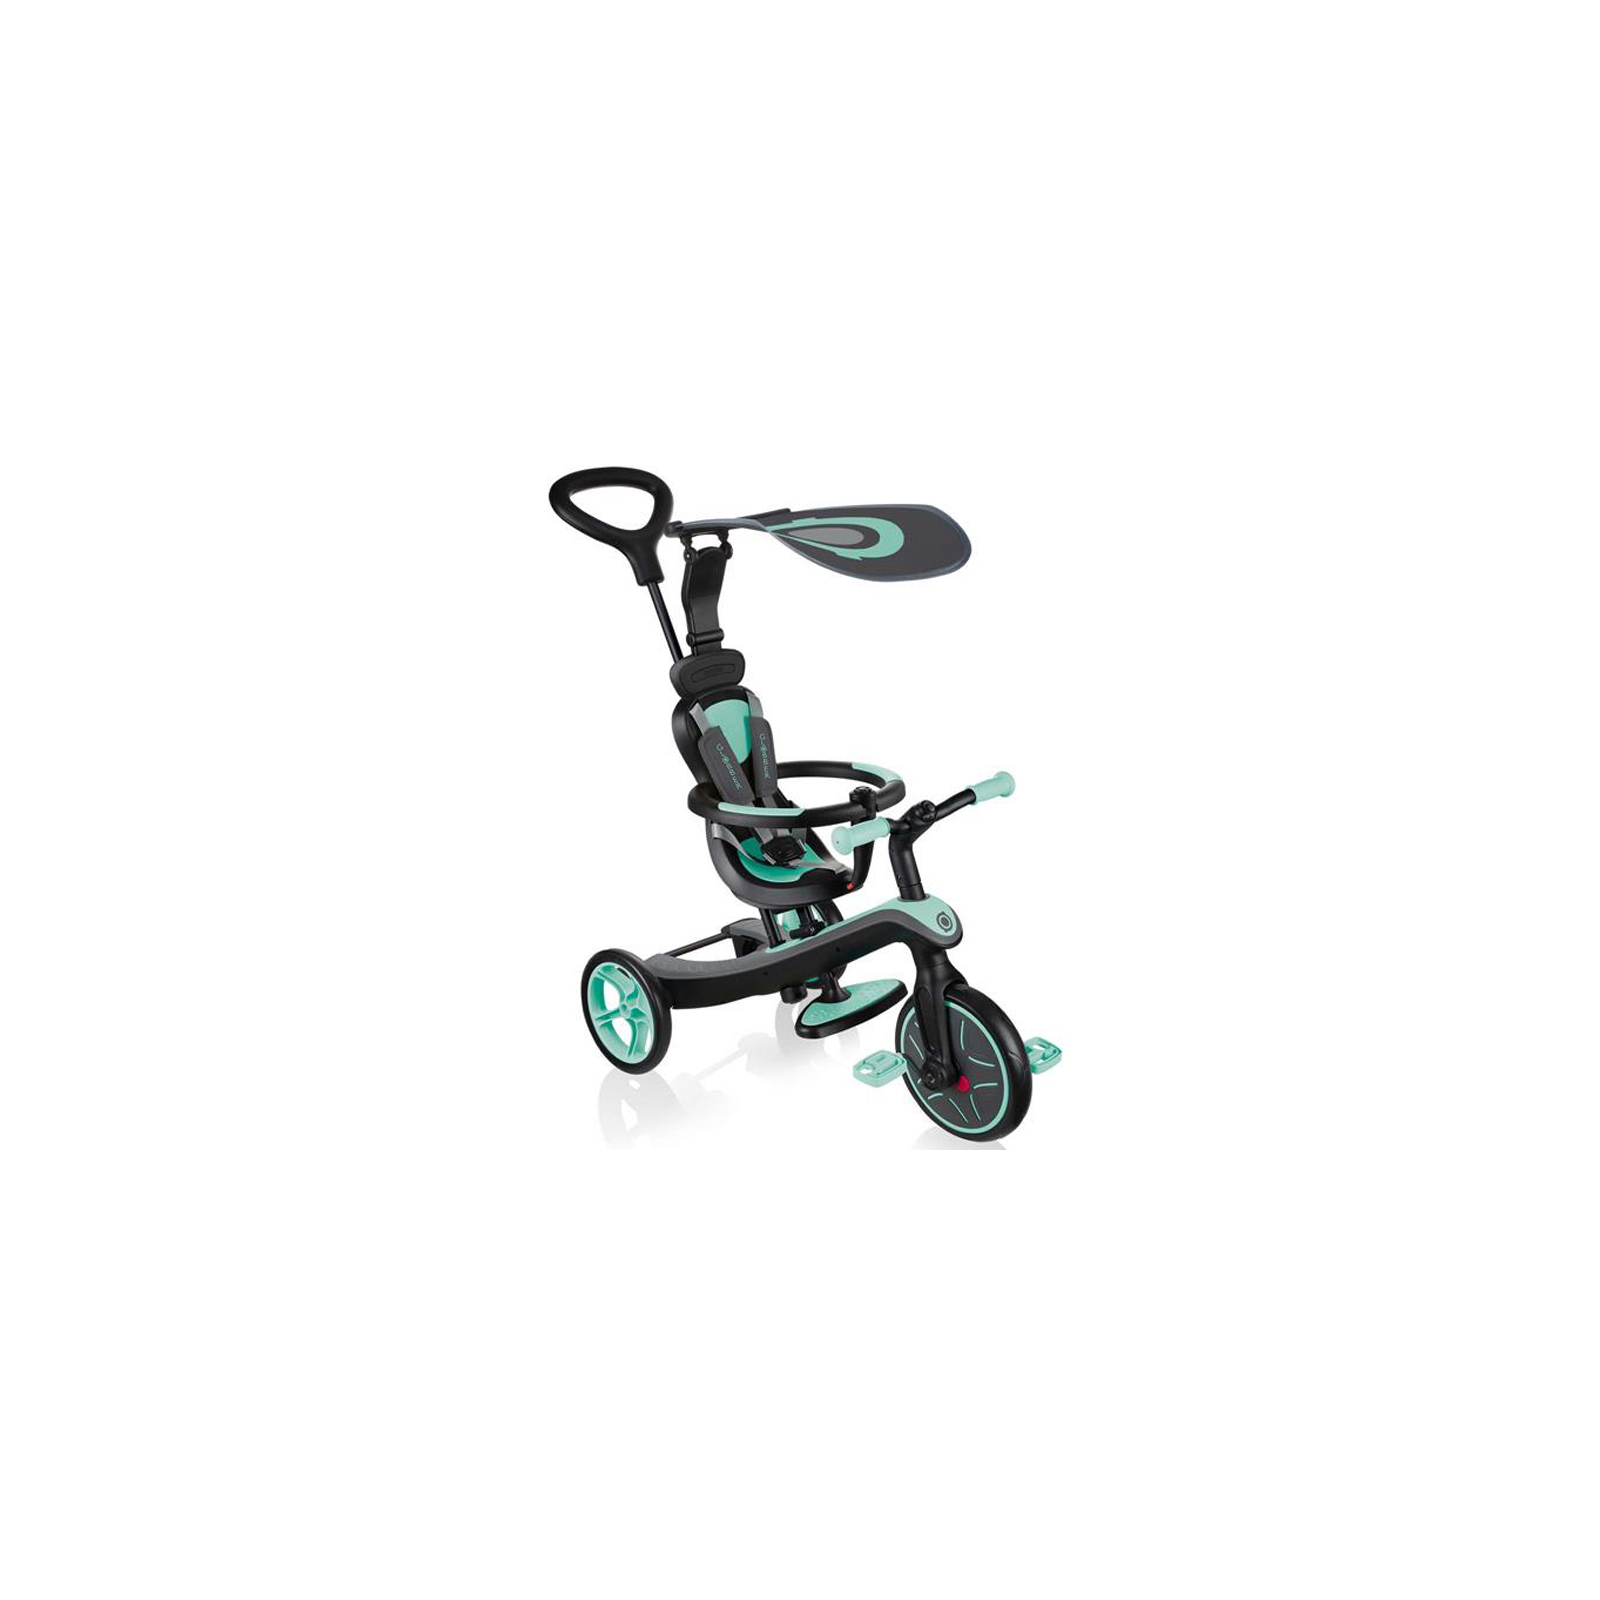 Детский велосипед Globber 4 в 1 Explorer Trike Teal Turquoise (632-105-3)